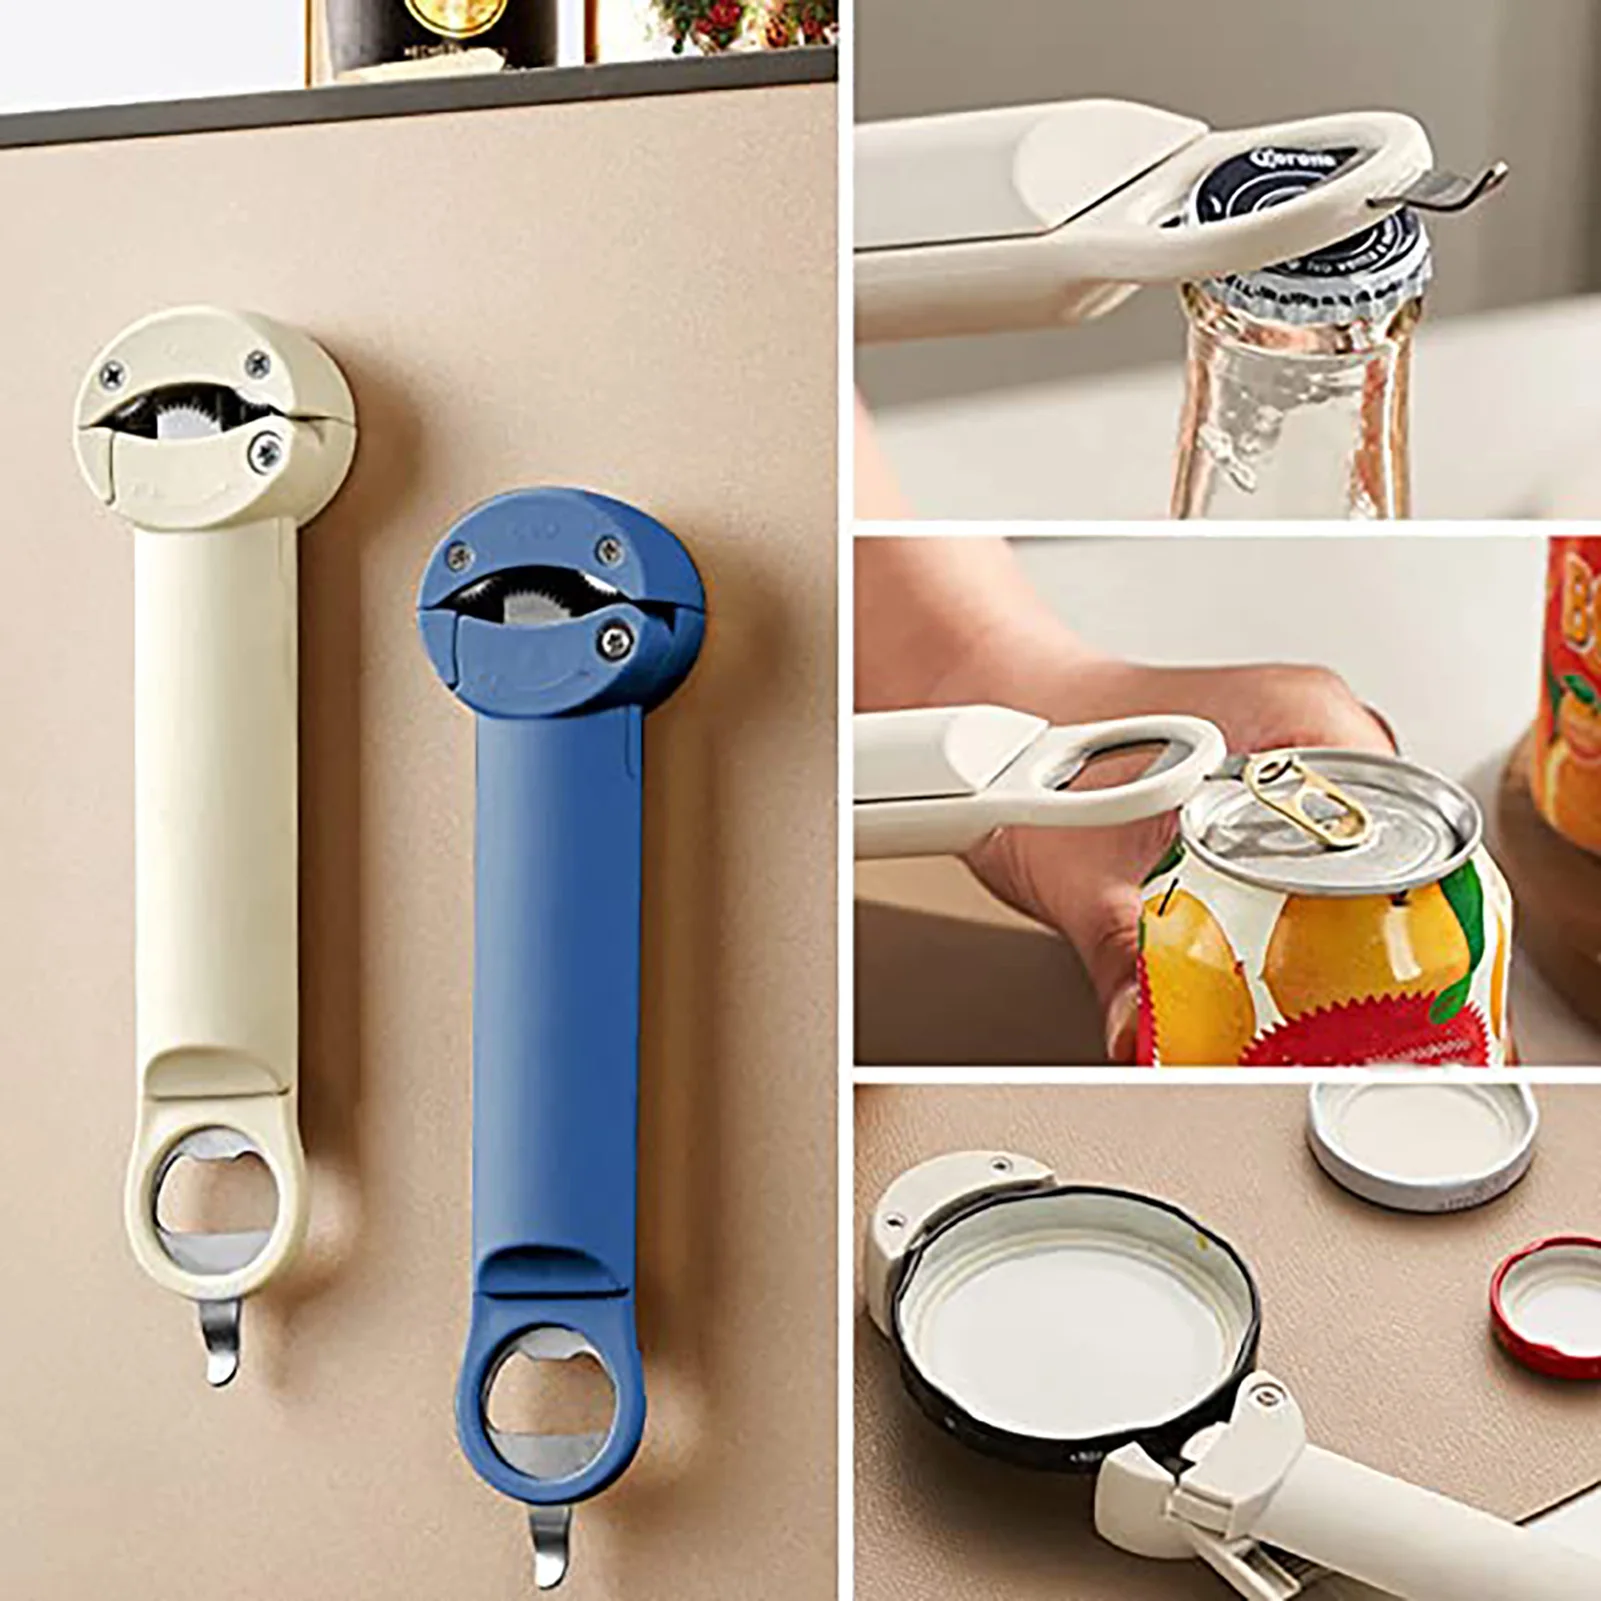 https://ae01.alicdn.com/kf/S48ca42cf400f458aa602cc03dd136977a/Magnetic-Multifunction-Jar-Opener-Adjustable-Can-Gripper-Tight-Lid-Opener-Kitchen-Home-Gadgets-Elderly-with-Arthritis.jpg